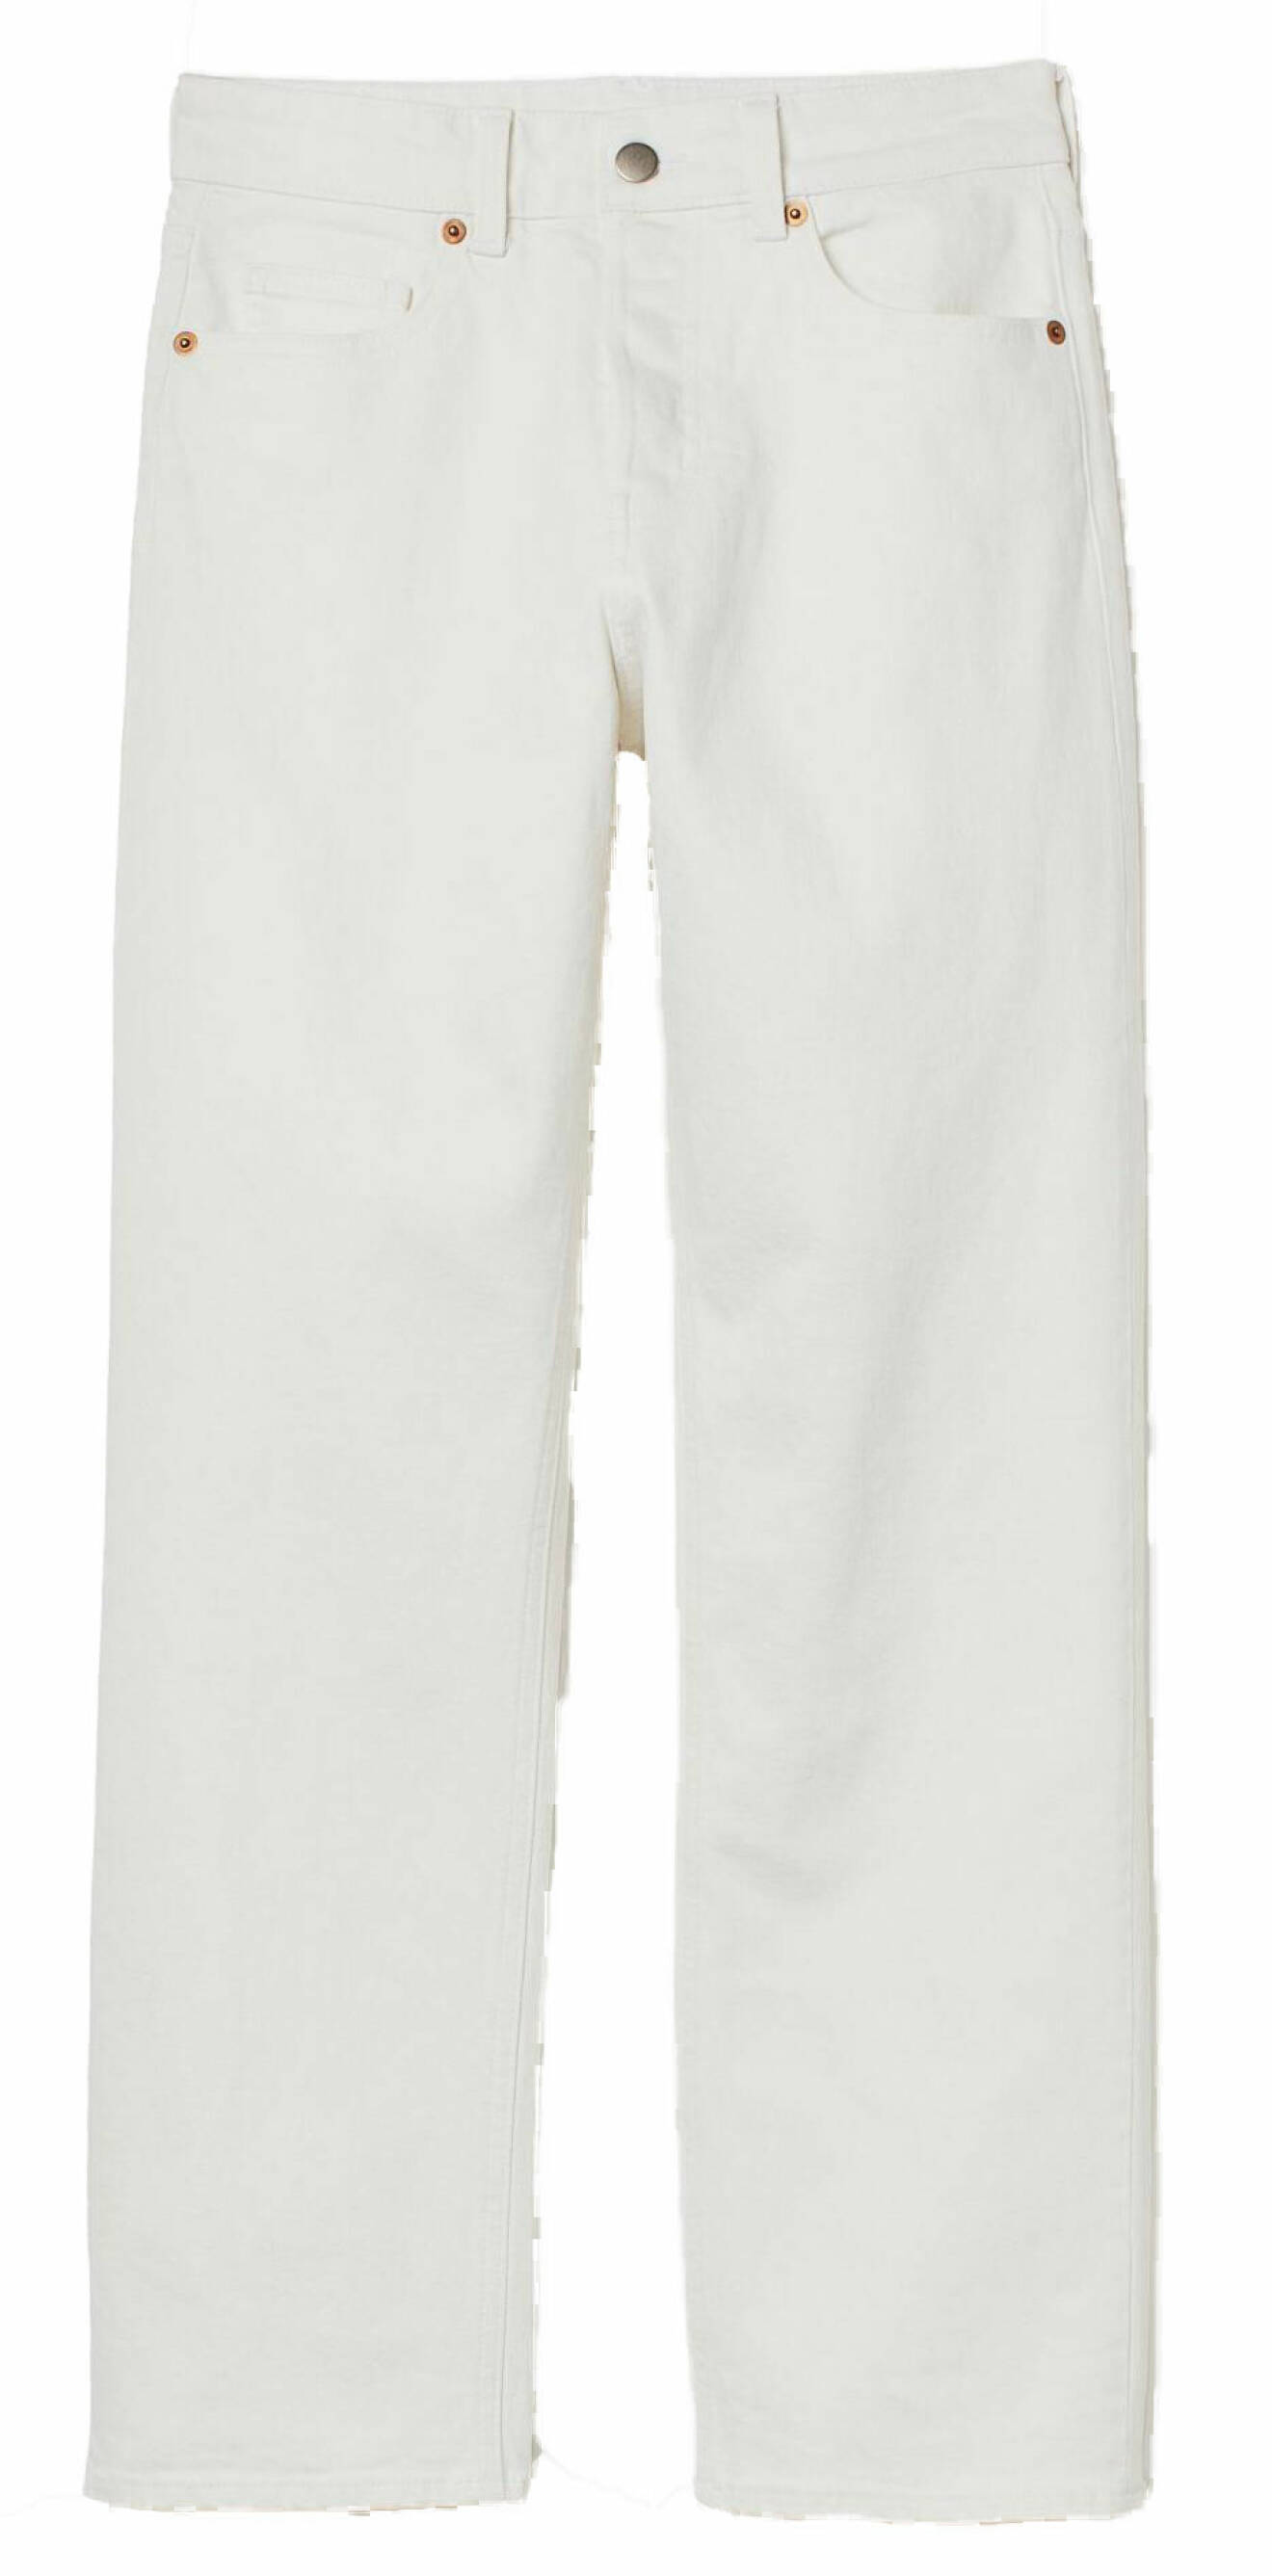 vita raka jeans från H&amp;M.